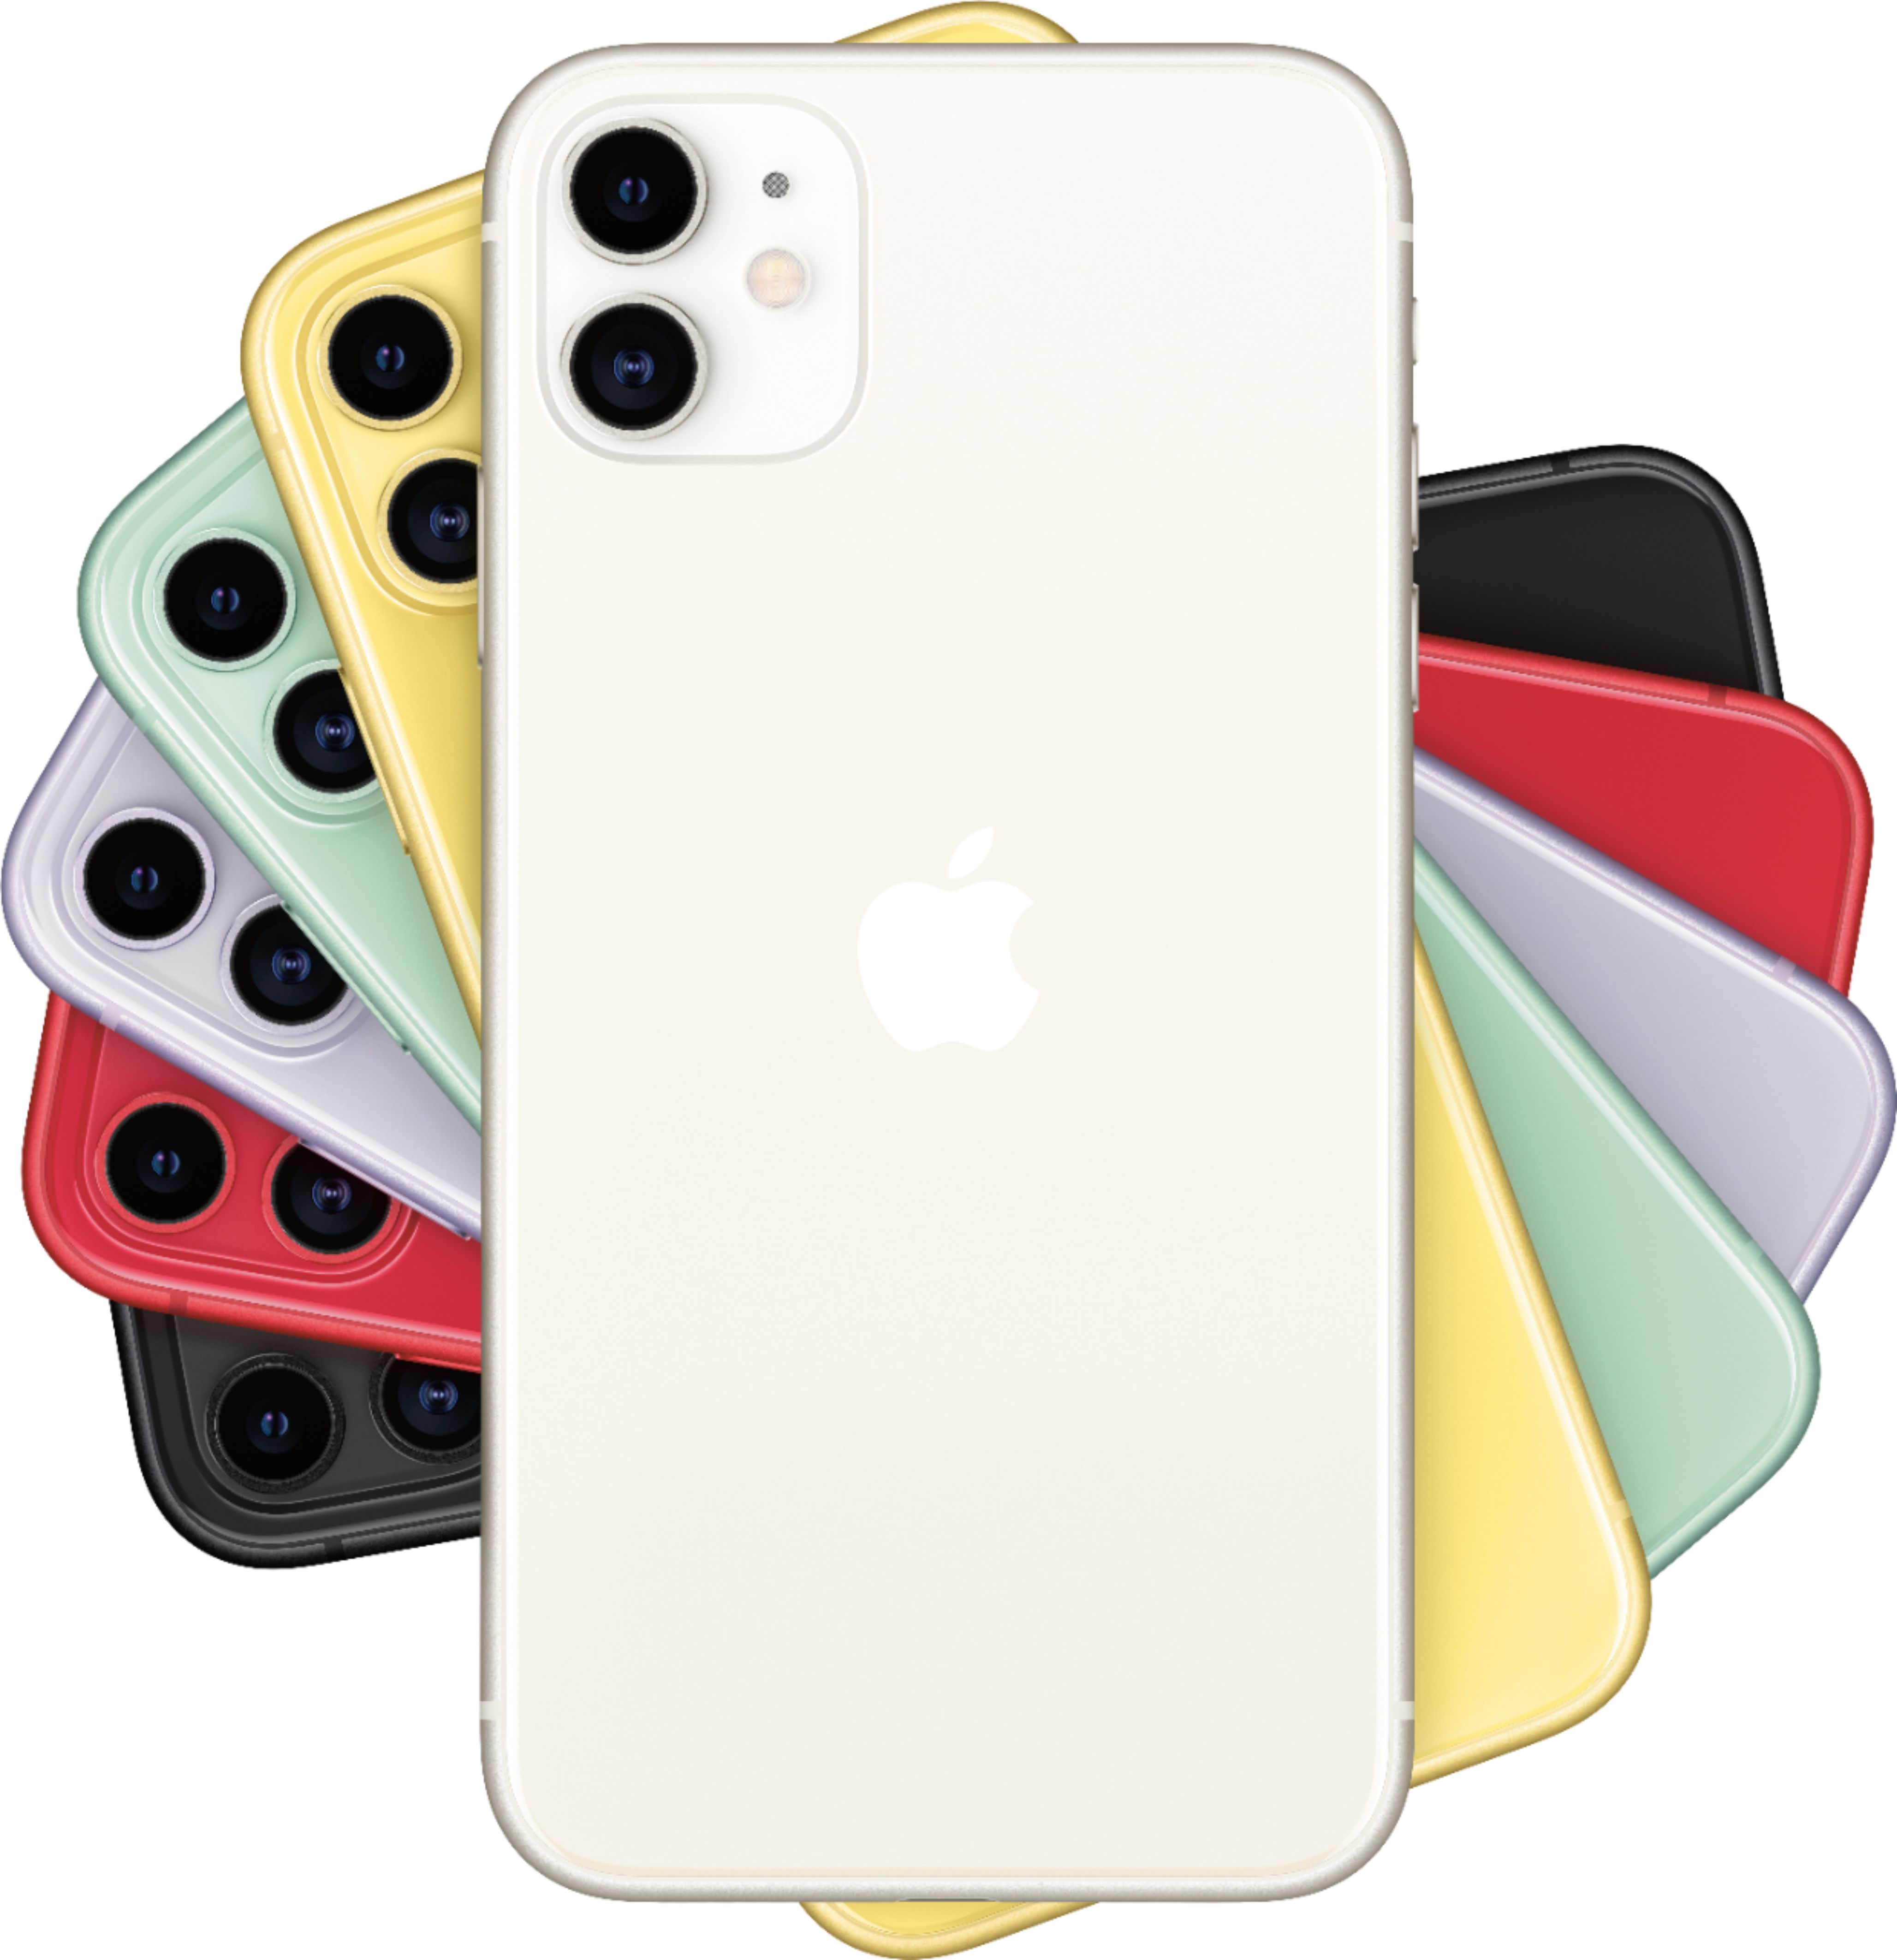 Apple Iphone 11 256gb White Verizon Mwlm2ll A Best Buy